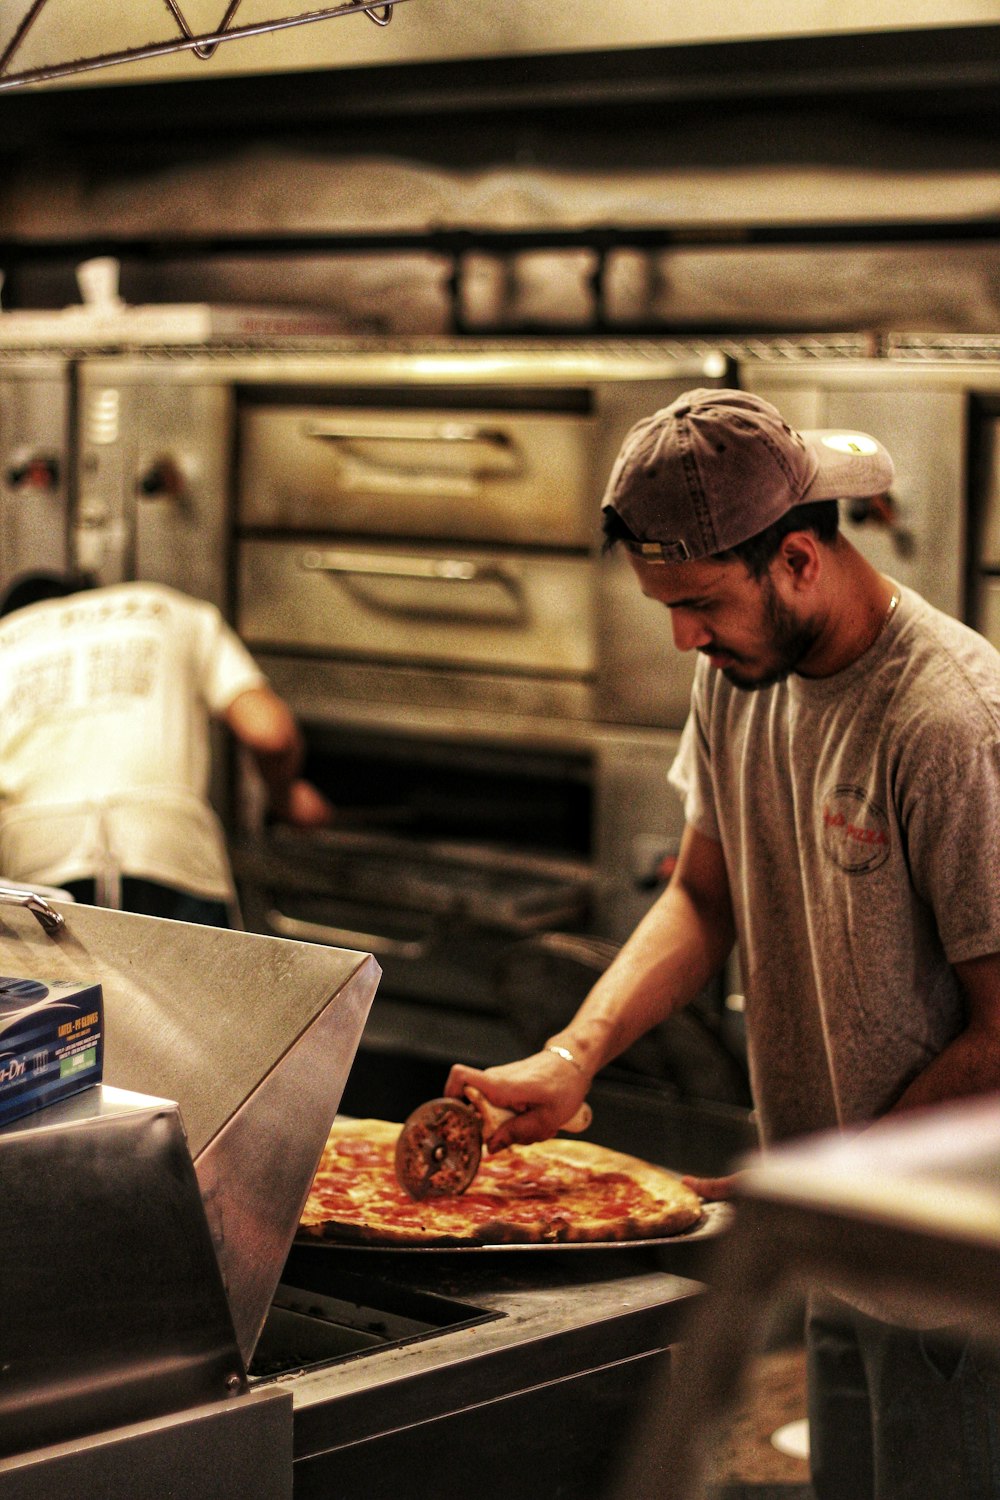 man slicing pizza